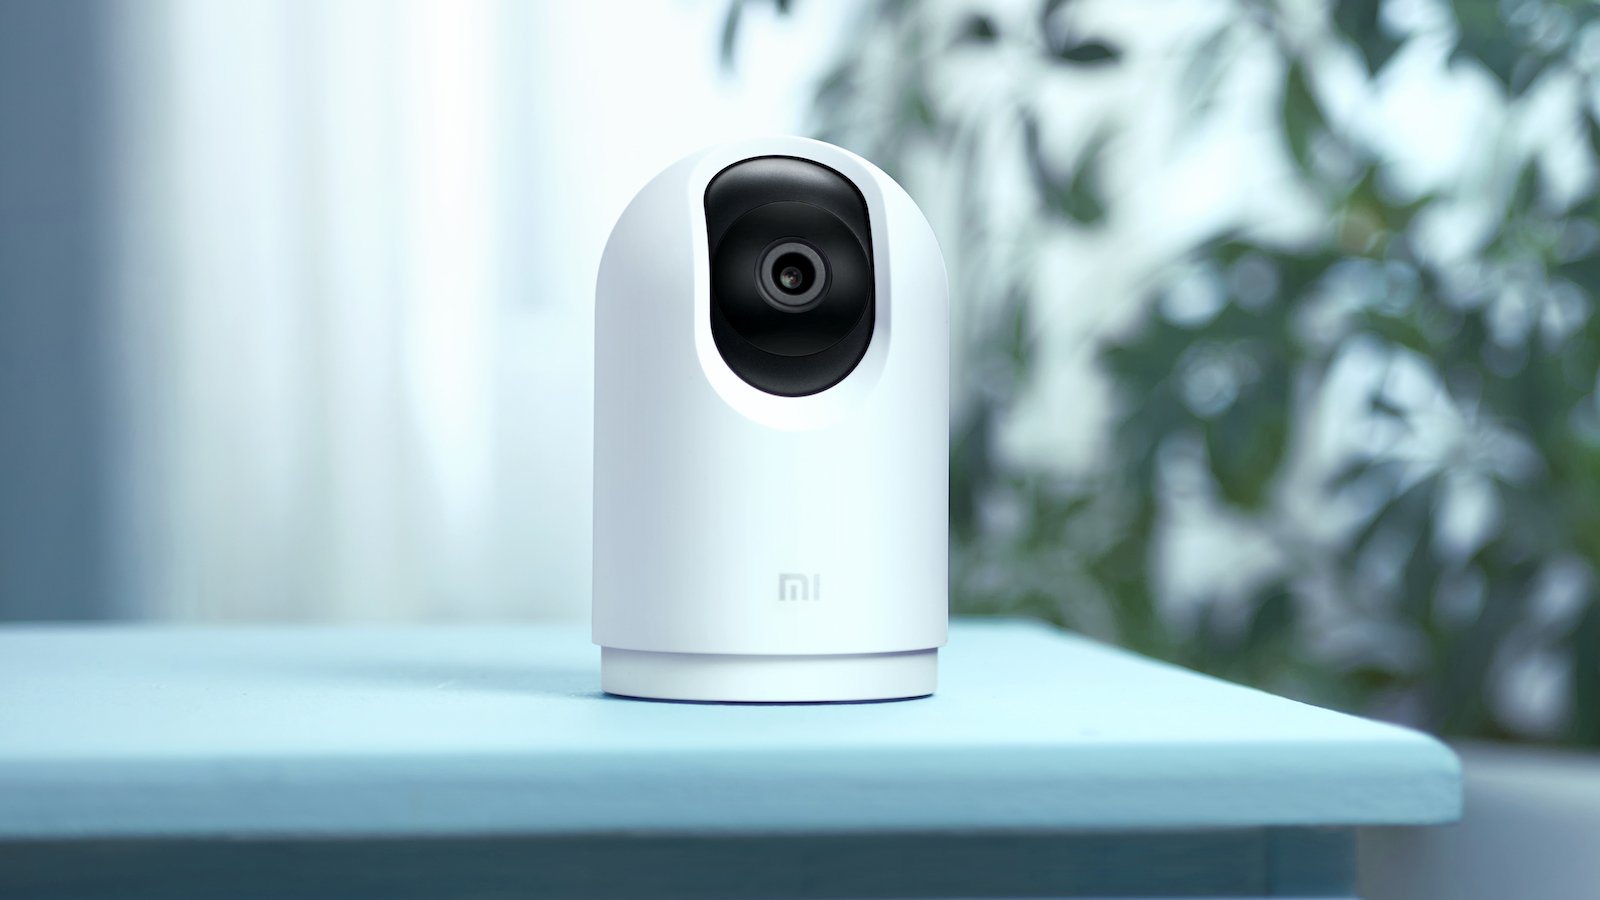 Xiaomi Mi 360° Home Security Camera 2K Pro features AI human detection